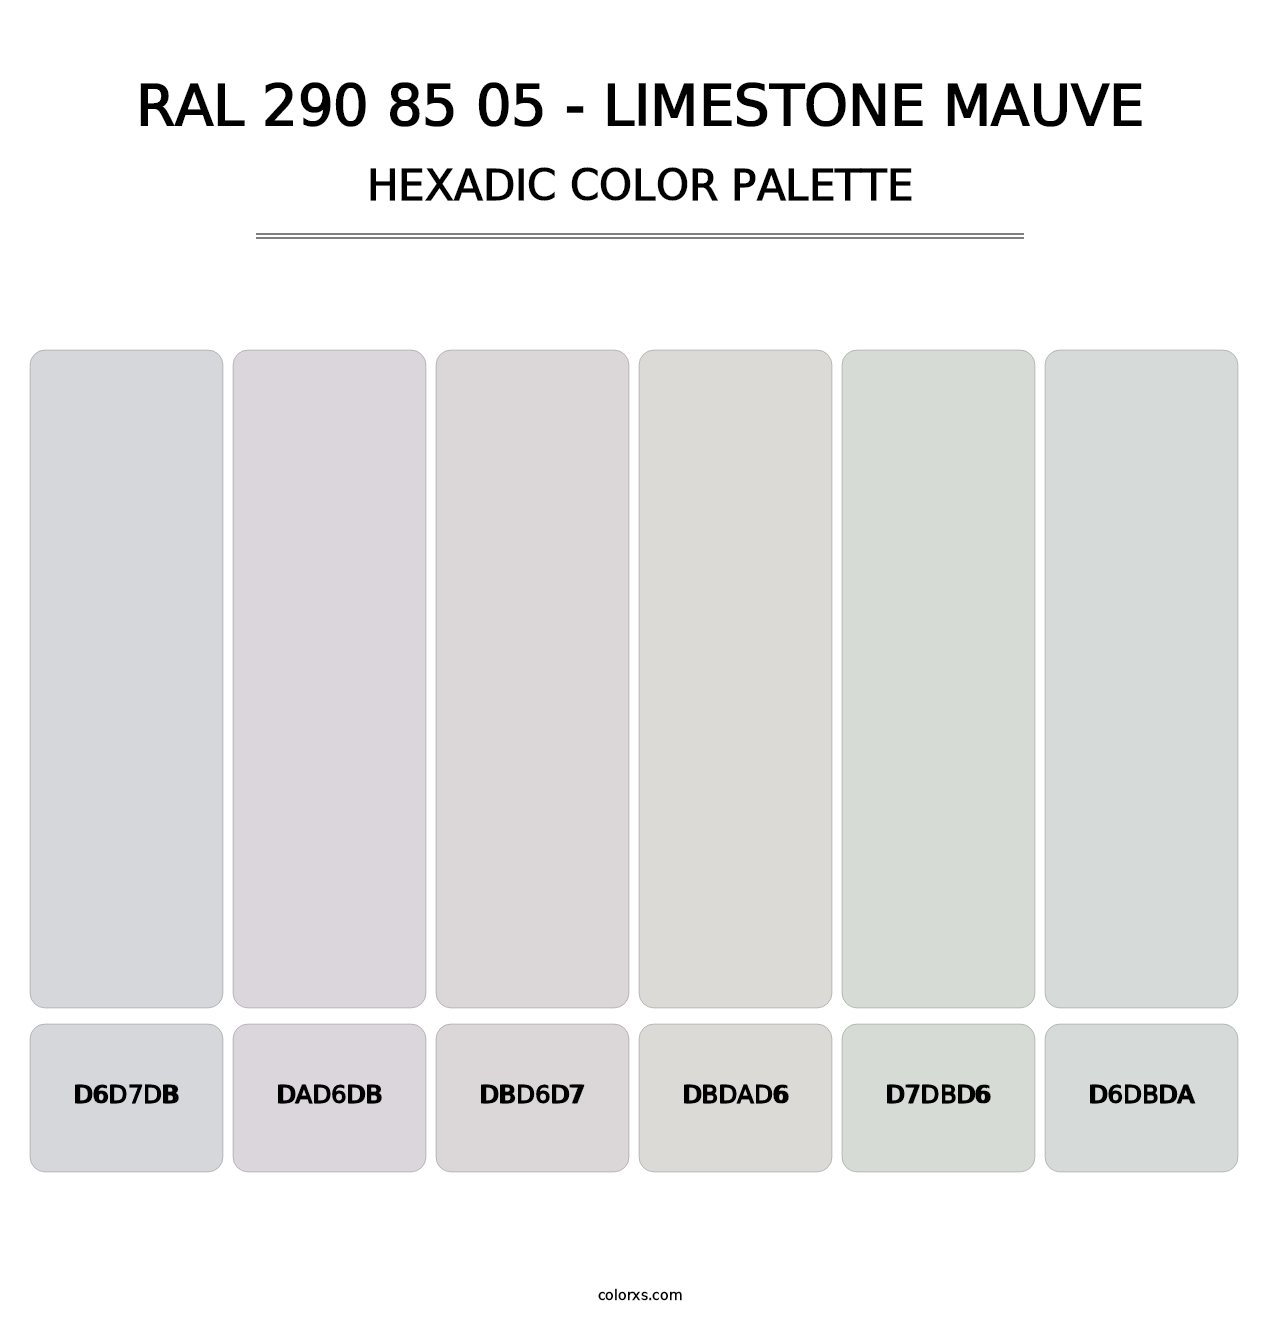 RAL 290 85 05 - Limestone Mauve - Hexadic Color Palette